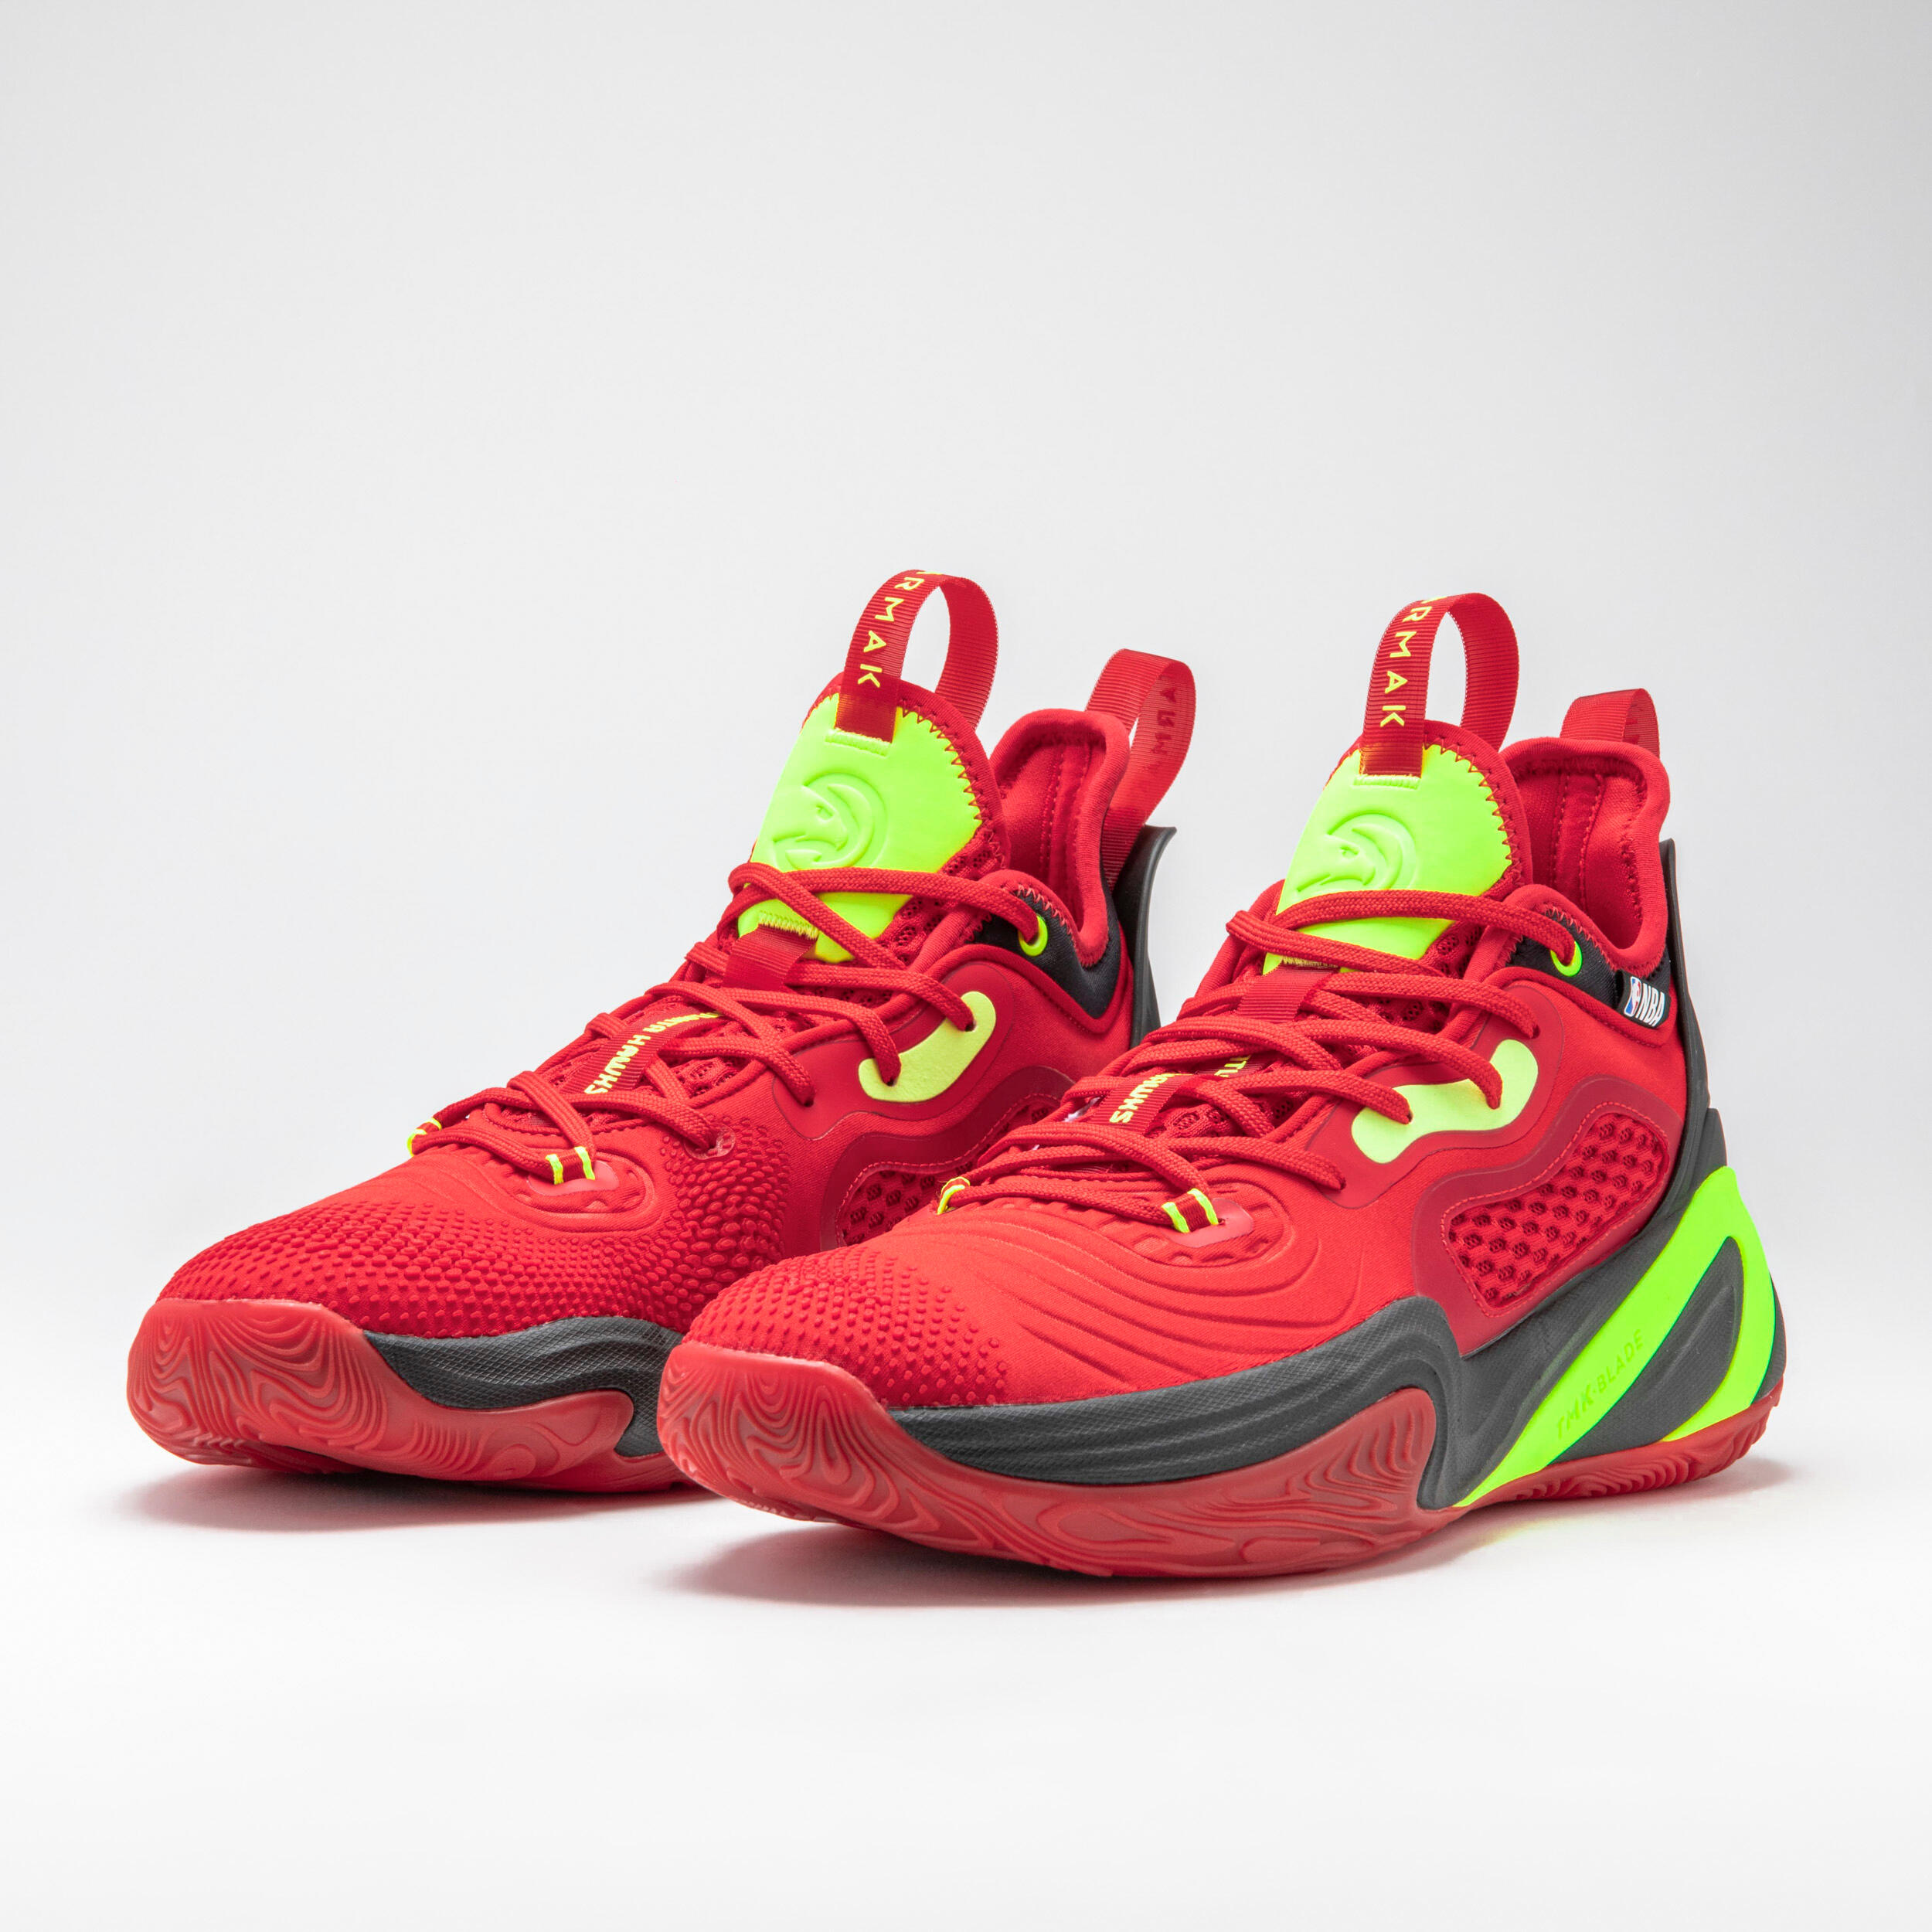 Men's/Women's Basketball Shoes SE900 - NBA Atlanta Hawks/Red 6/16